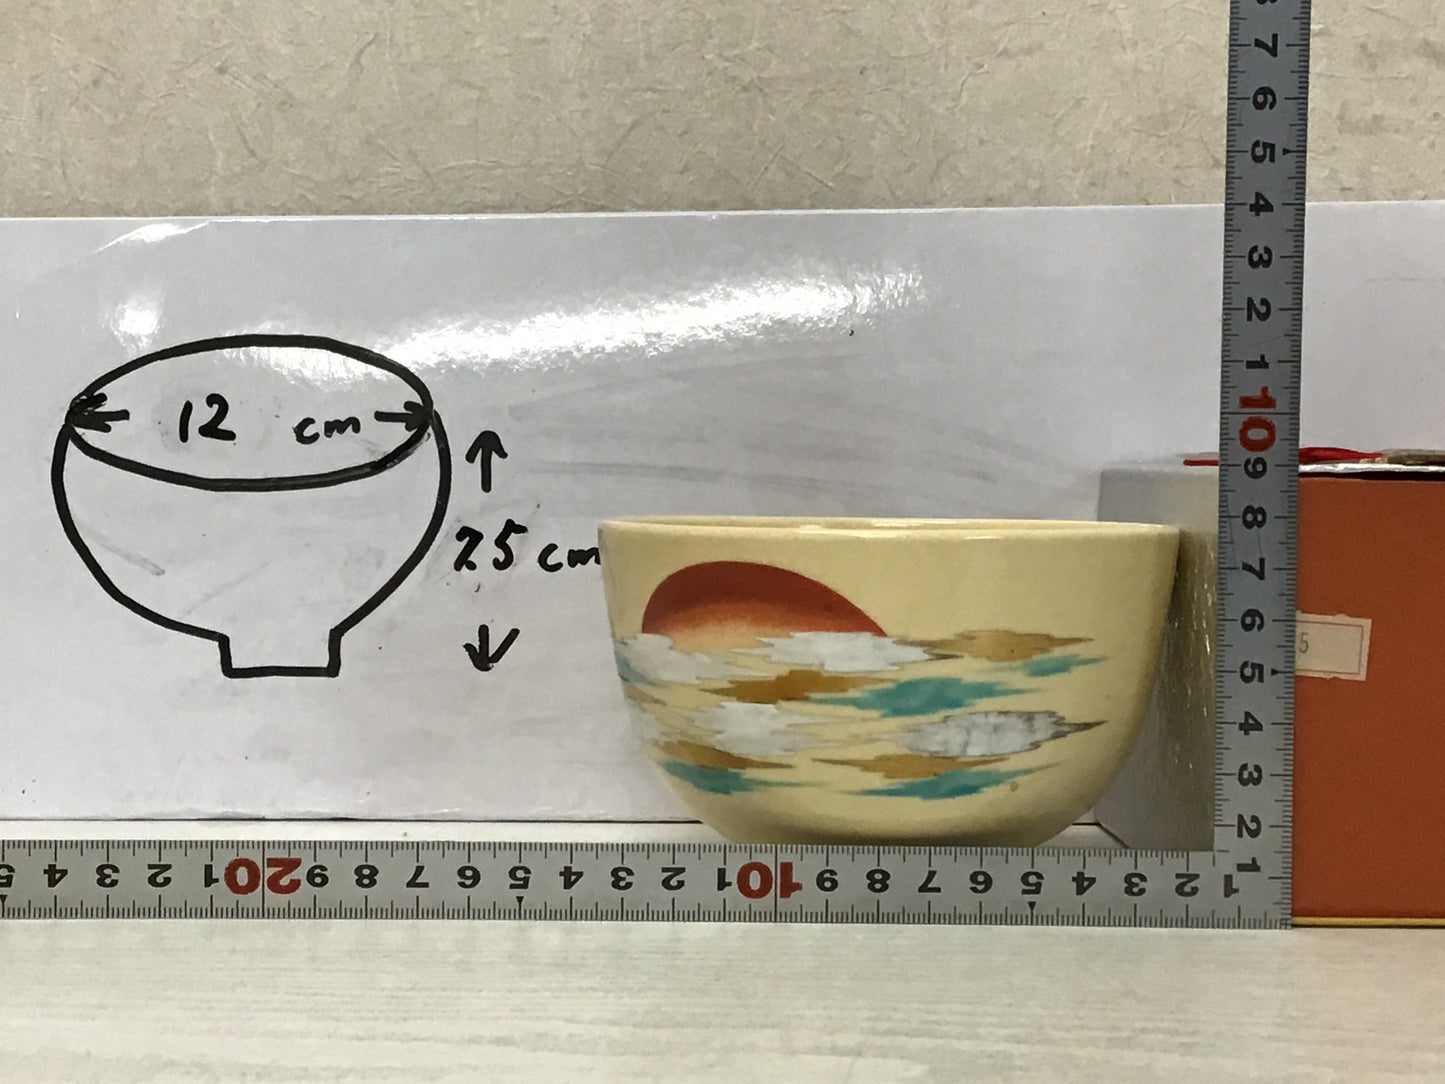 Y1769 CHAWAN Kyo-ware signed box Japanese bowl pottery Japan tea ceremony